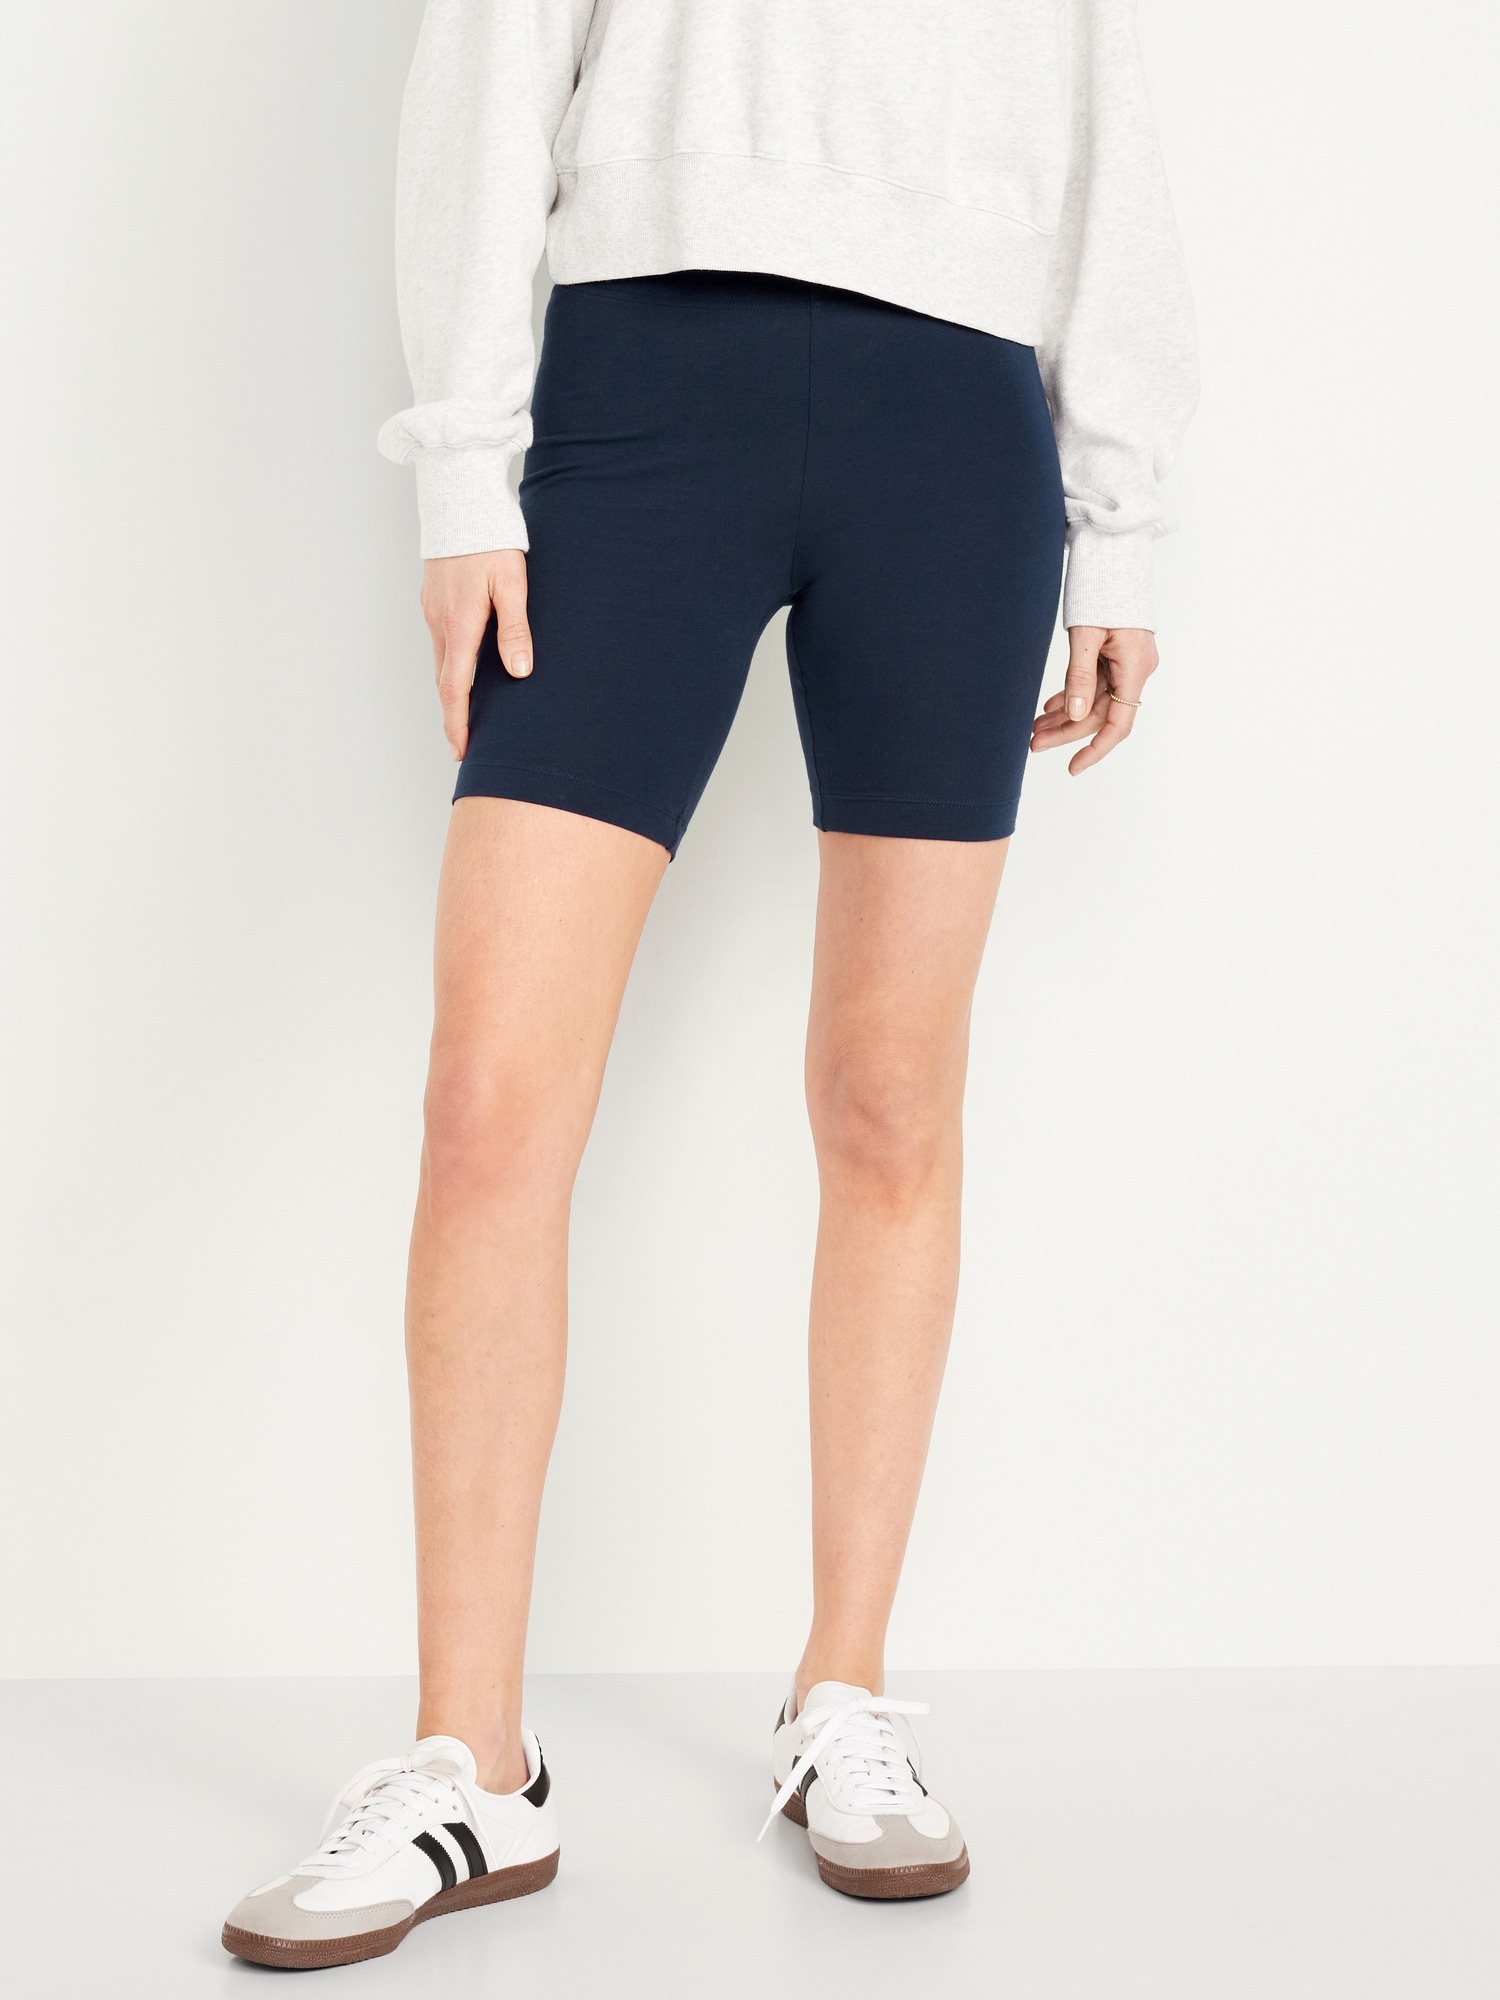 Skin Biker Shorts (8 in. inseam) - Pacific